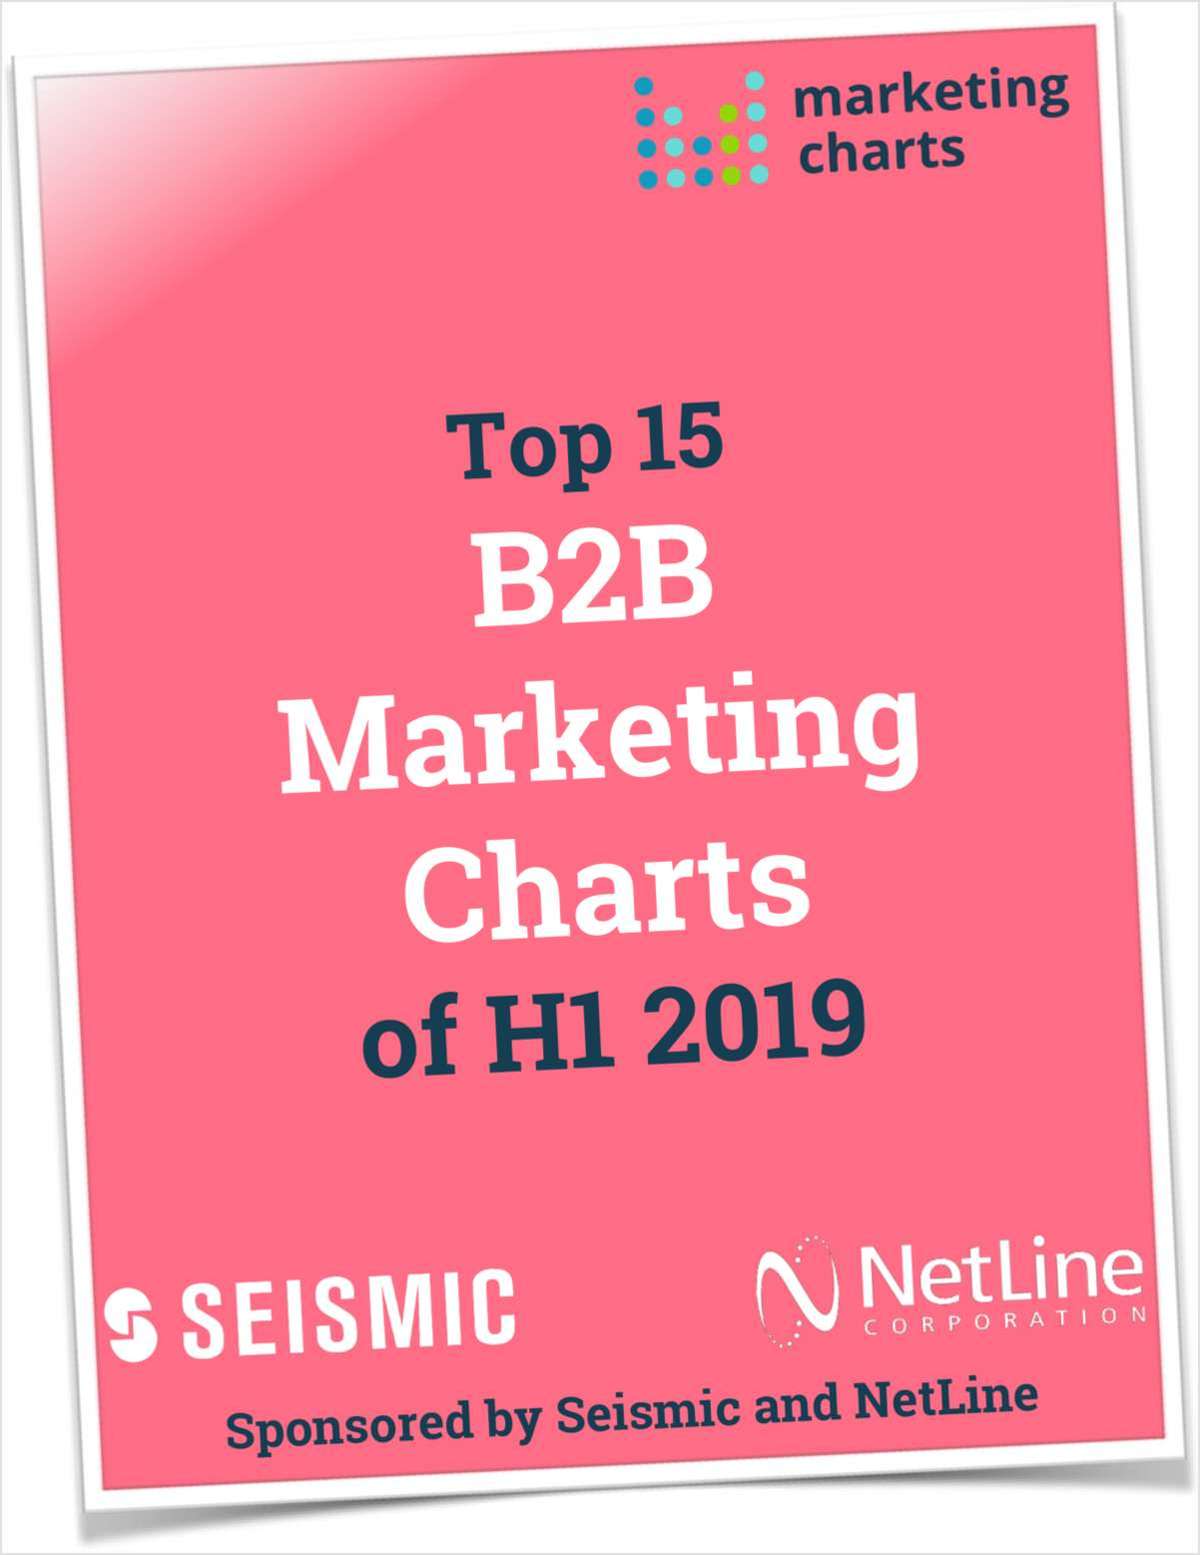 Top 15 B2B Marketing Charts of H1 2019